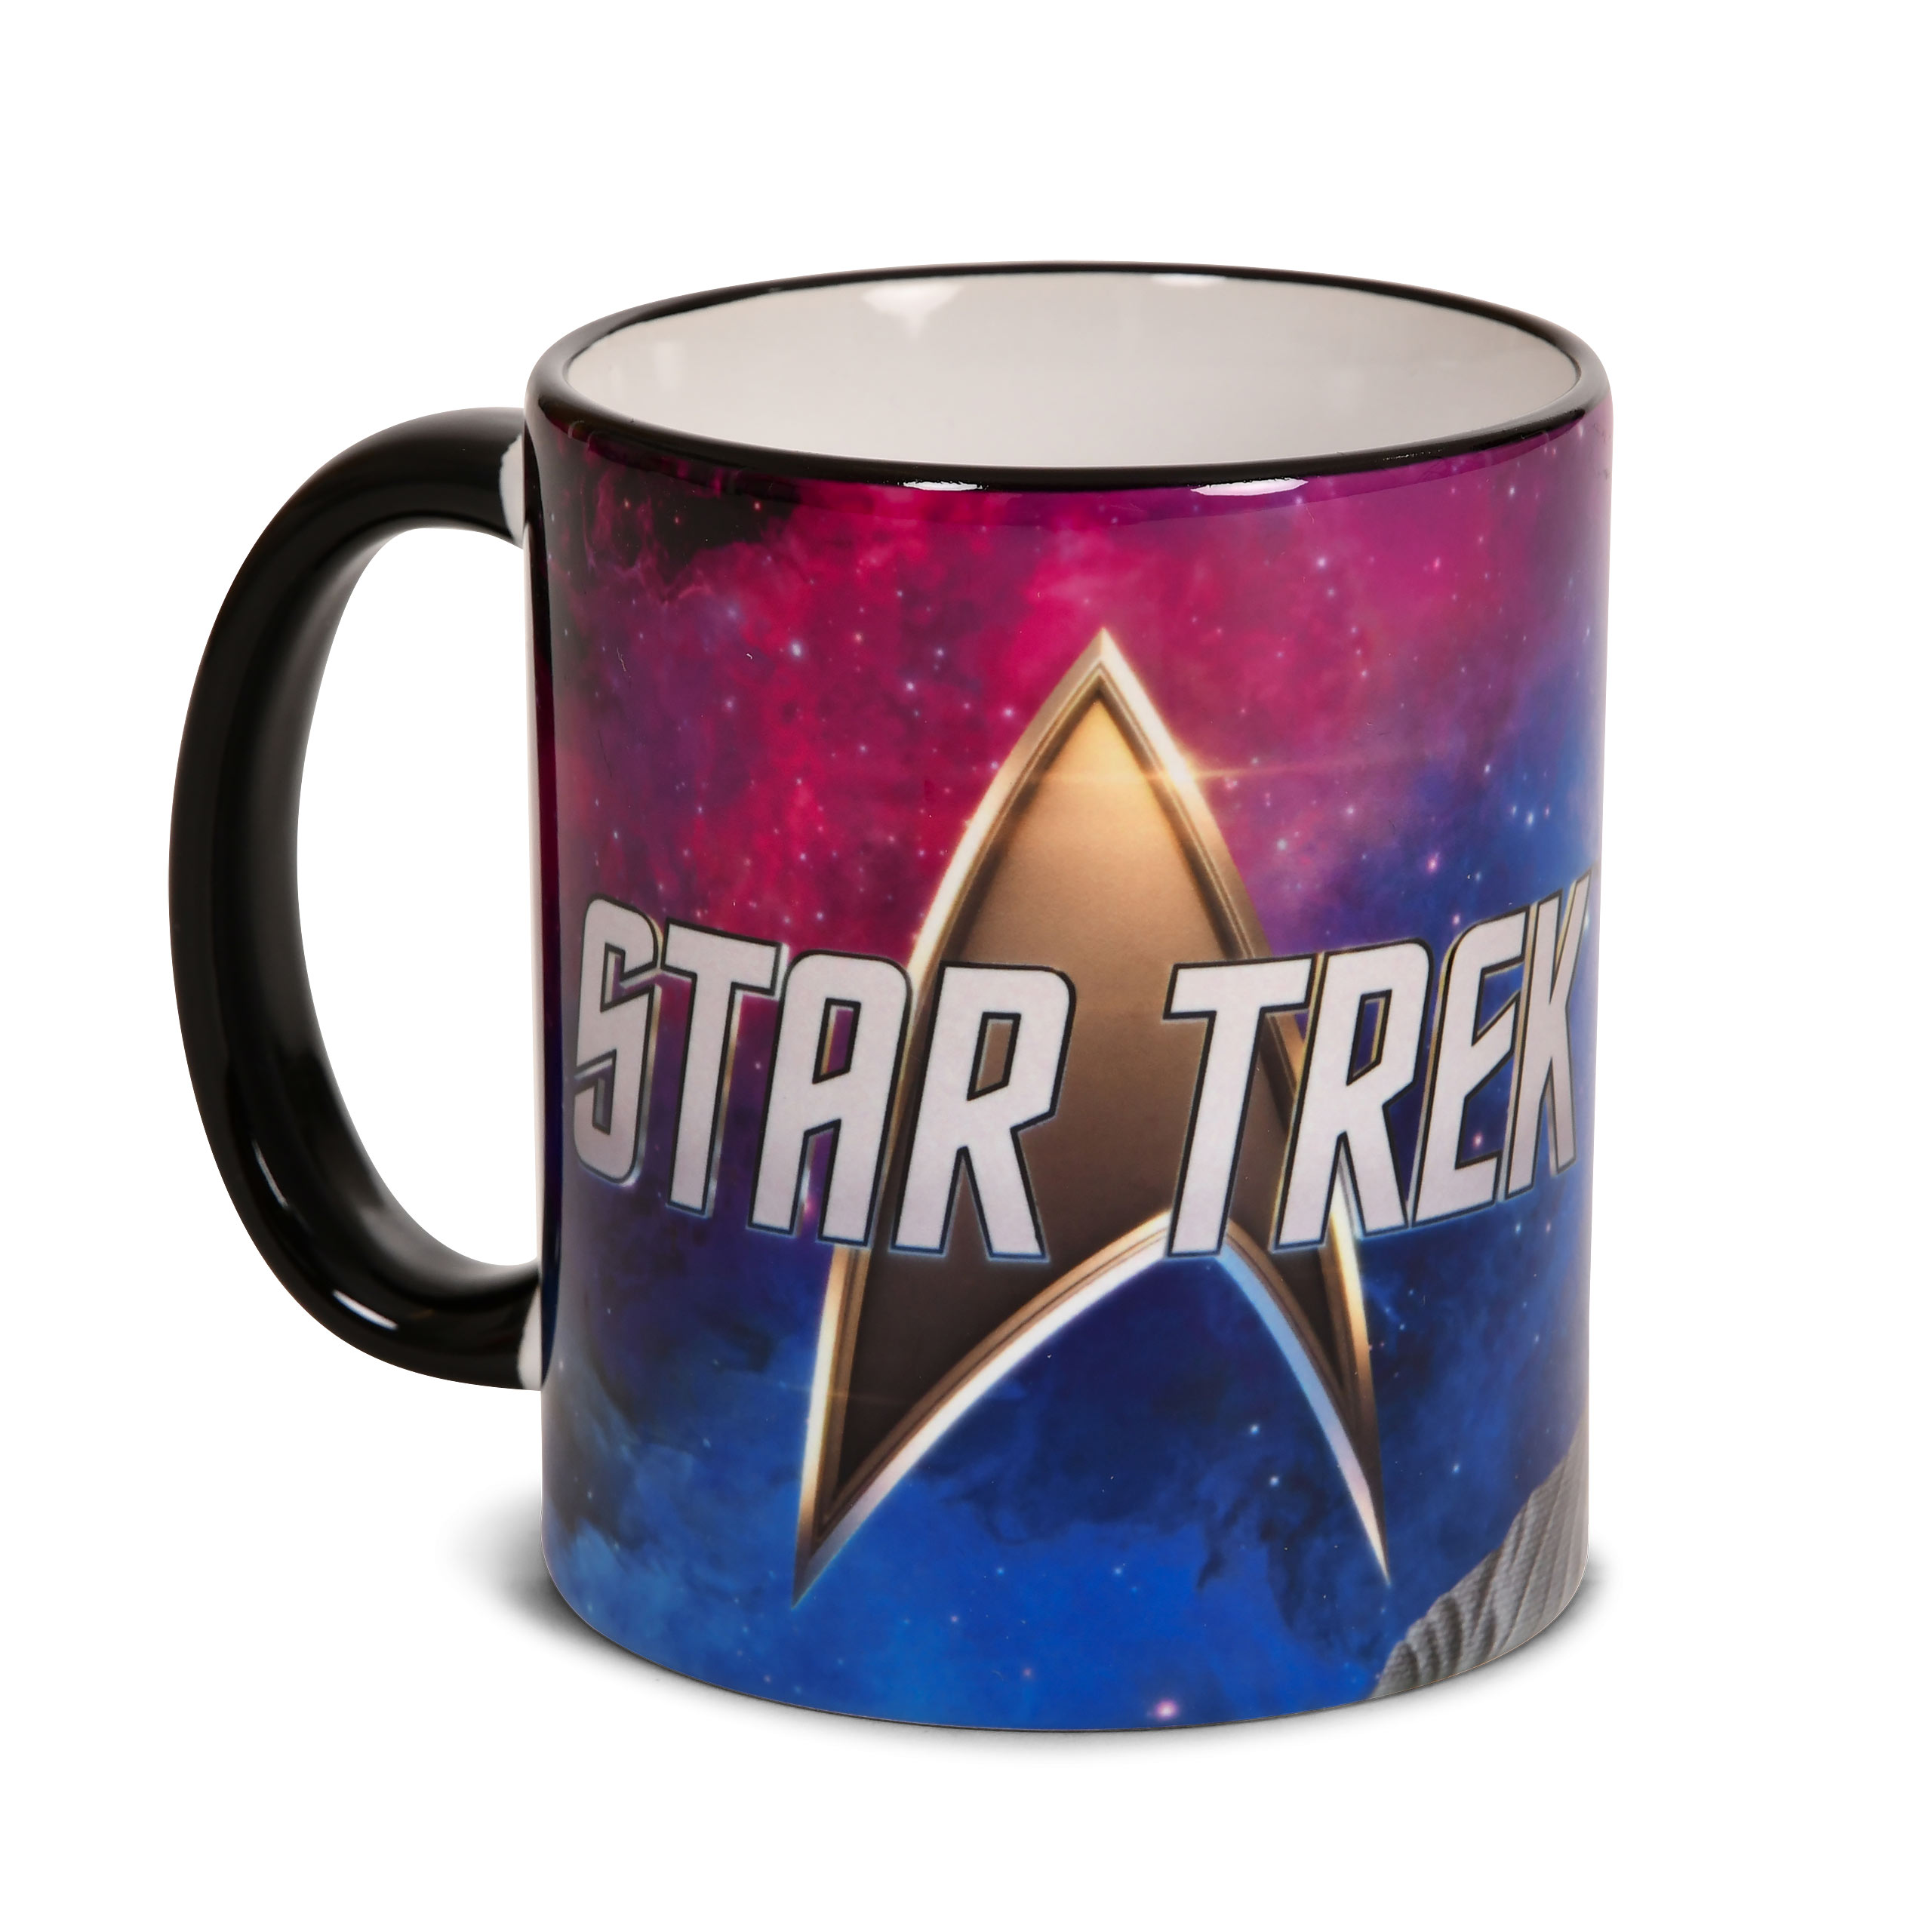 Star Trek - Captain Sisko Mug